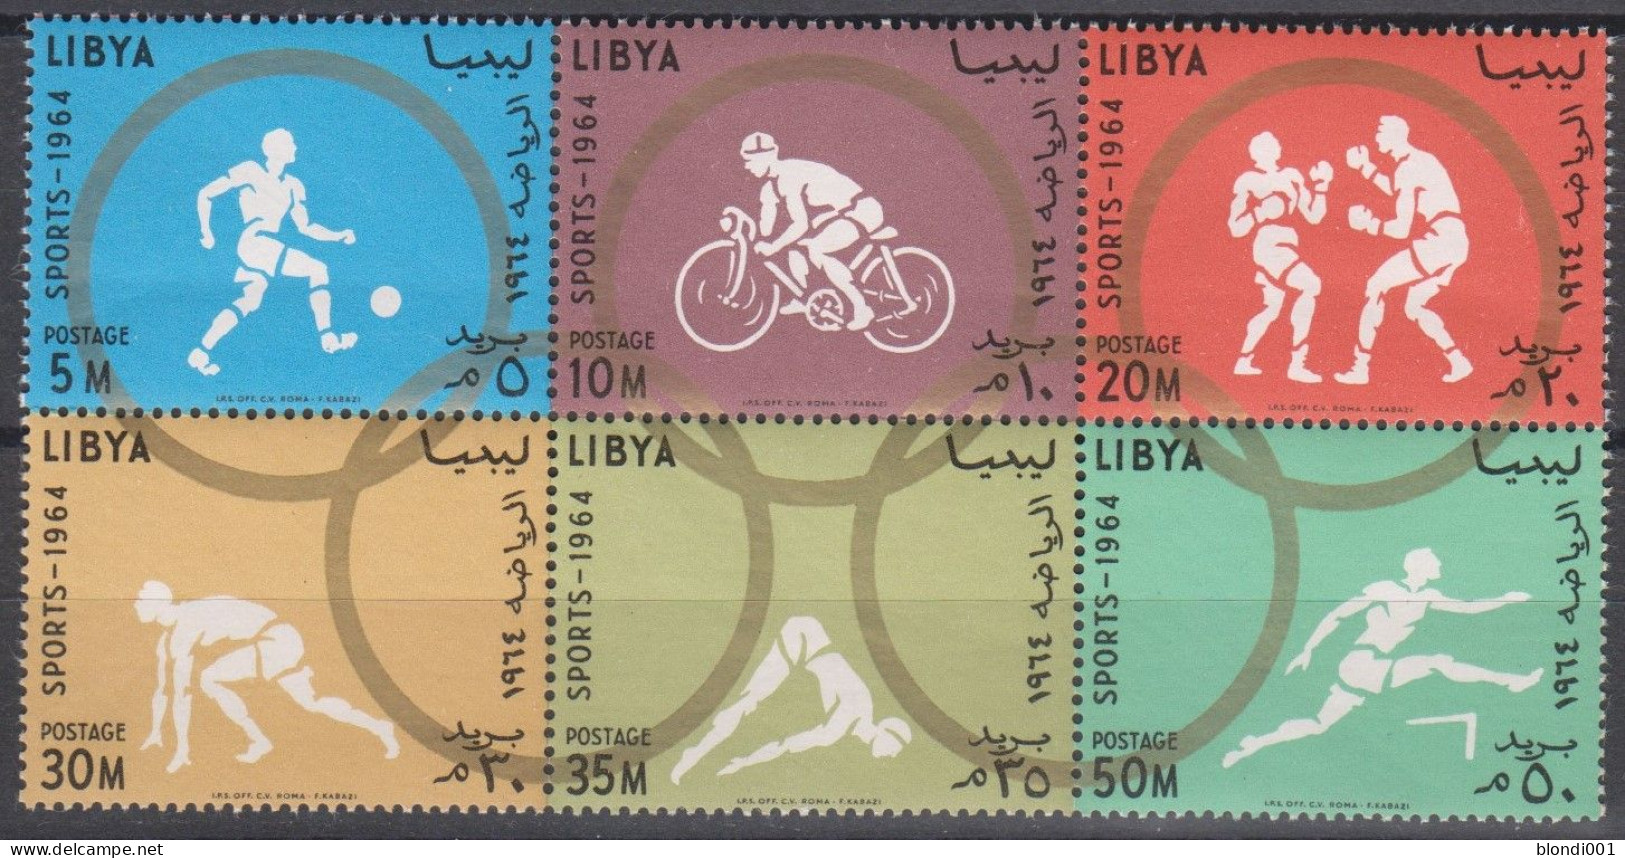 Olympic 1964 - Cycling - LIBYA - Set 6v MNH - Sommer 2008: Peking